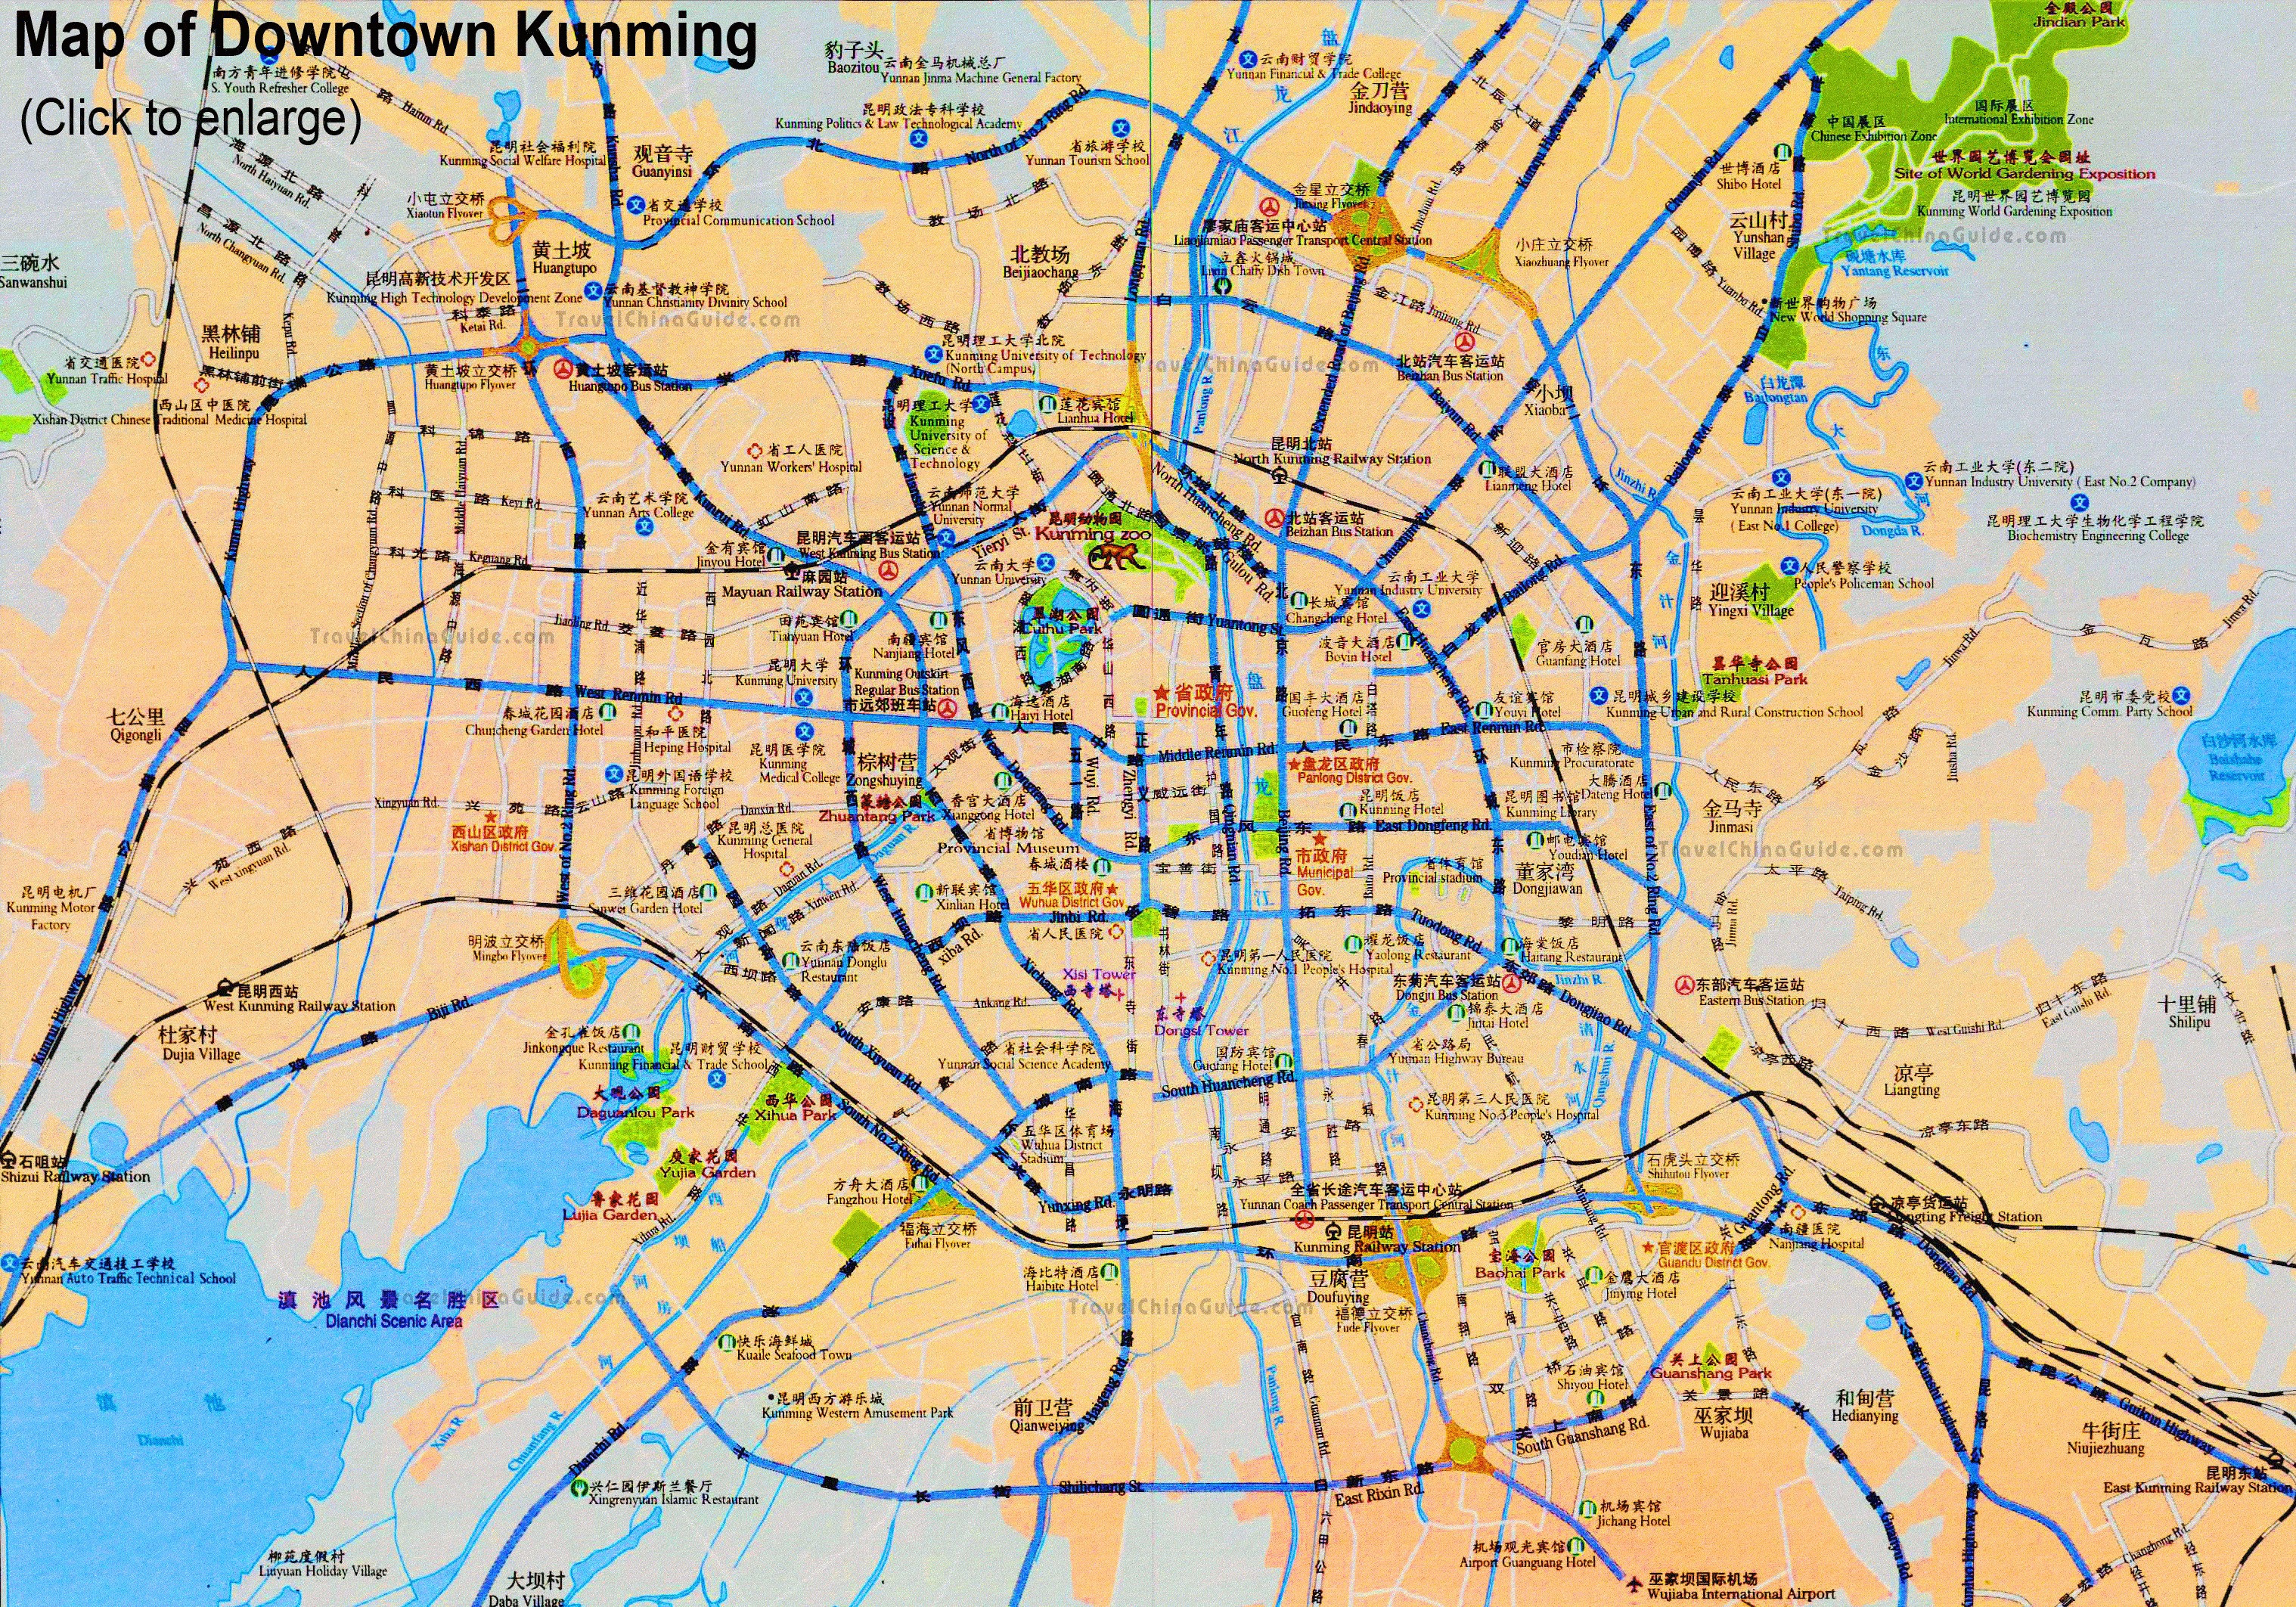 shenzhen road map in english 12 SHENZHEN ROAD MAP IN ENGLISH